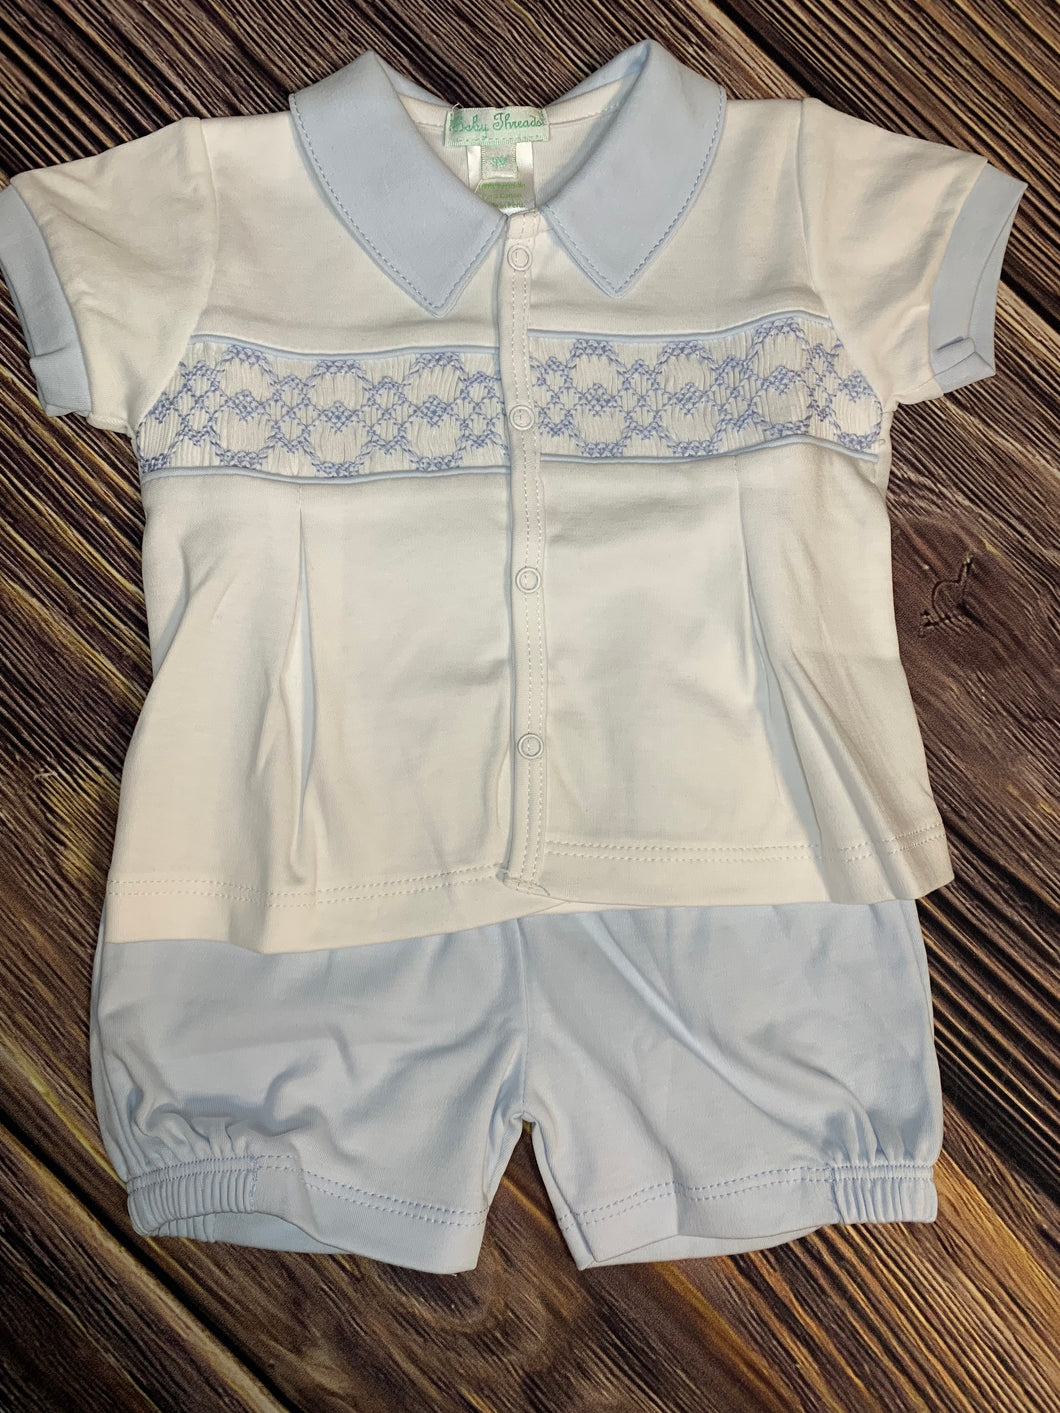 Baby Threads, Pima Cotton, Blue and White Smocked Set